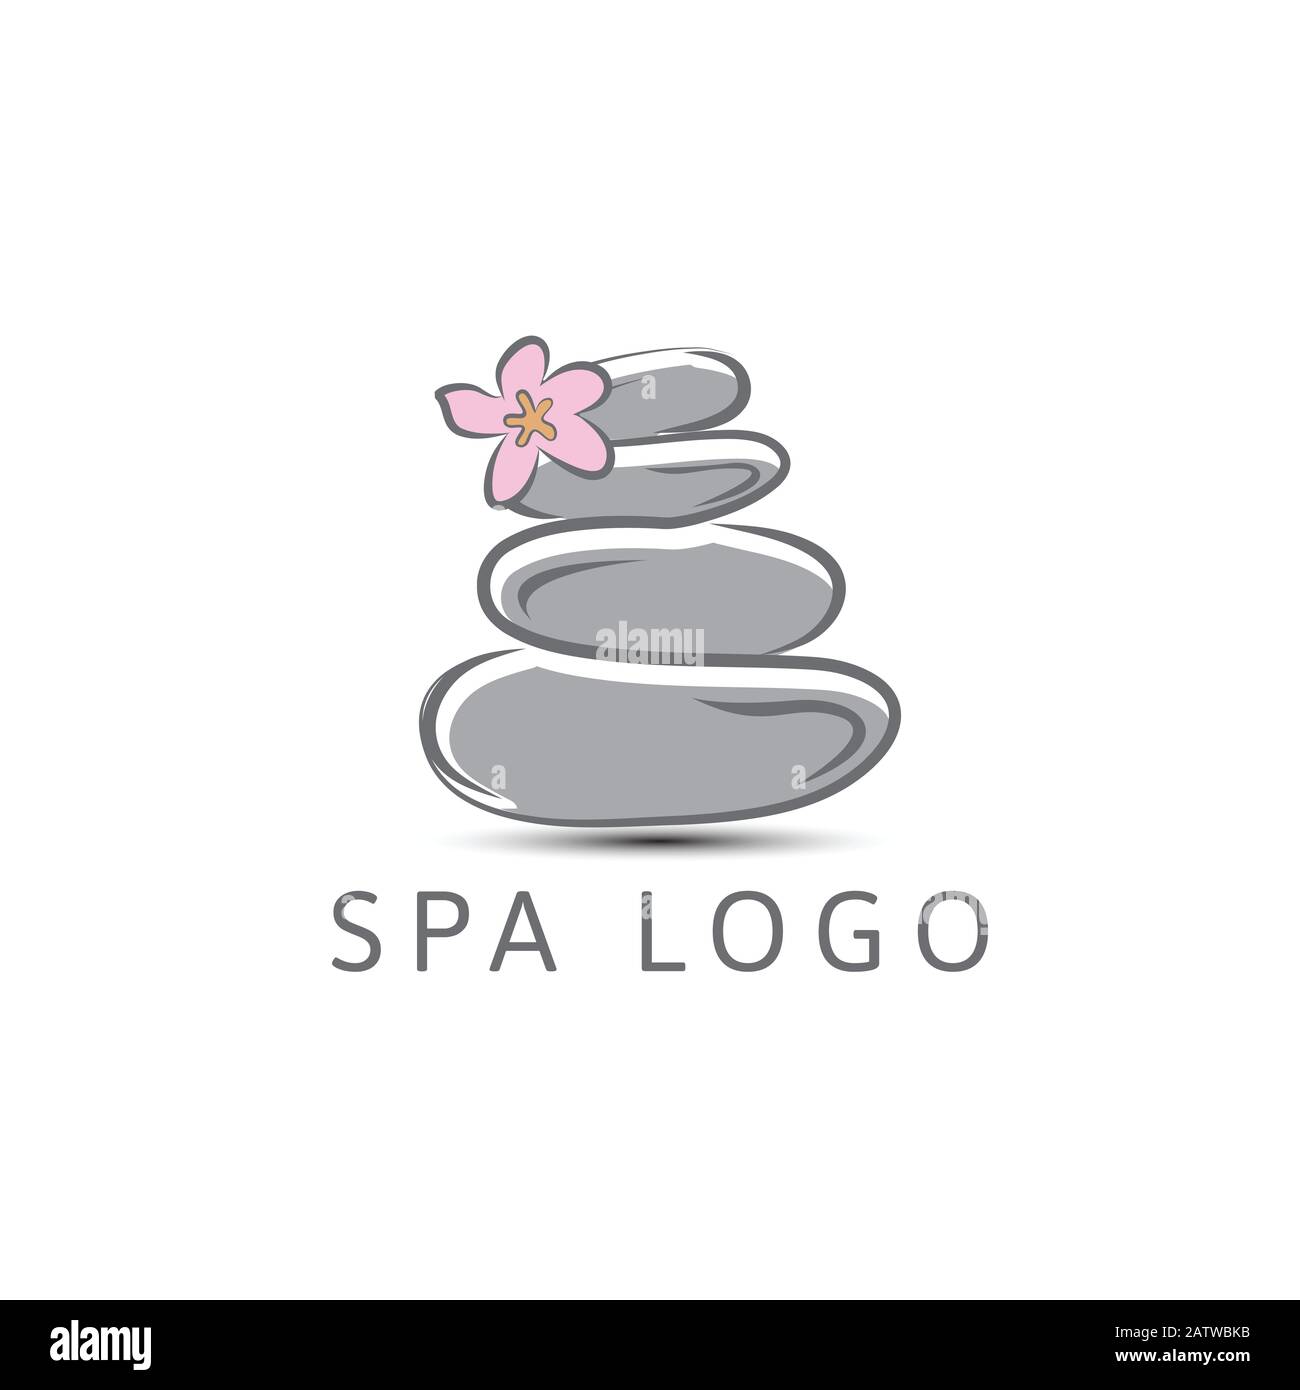 Spa - Template Logo für Spa-Lounge, Beauty-Salon, Massagebereich, Yoga-Center, Naturkosmetik etc Stock Vektor